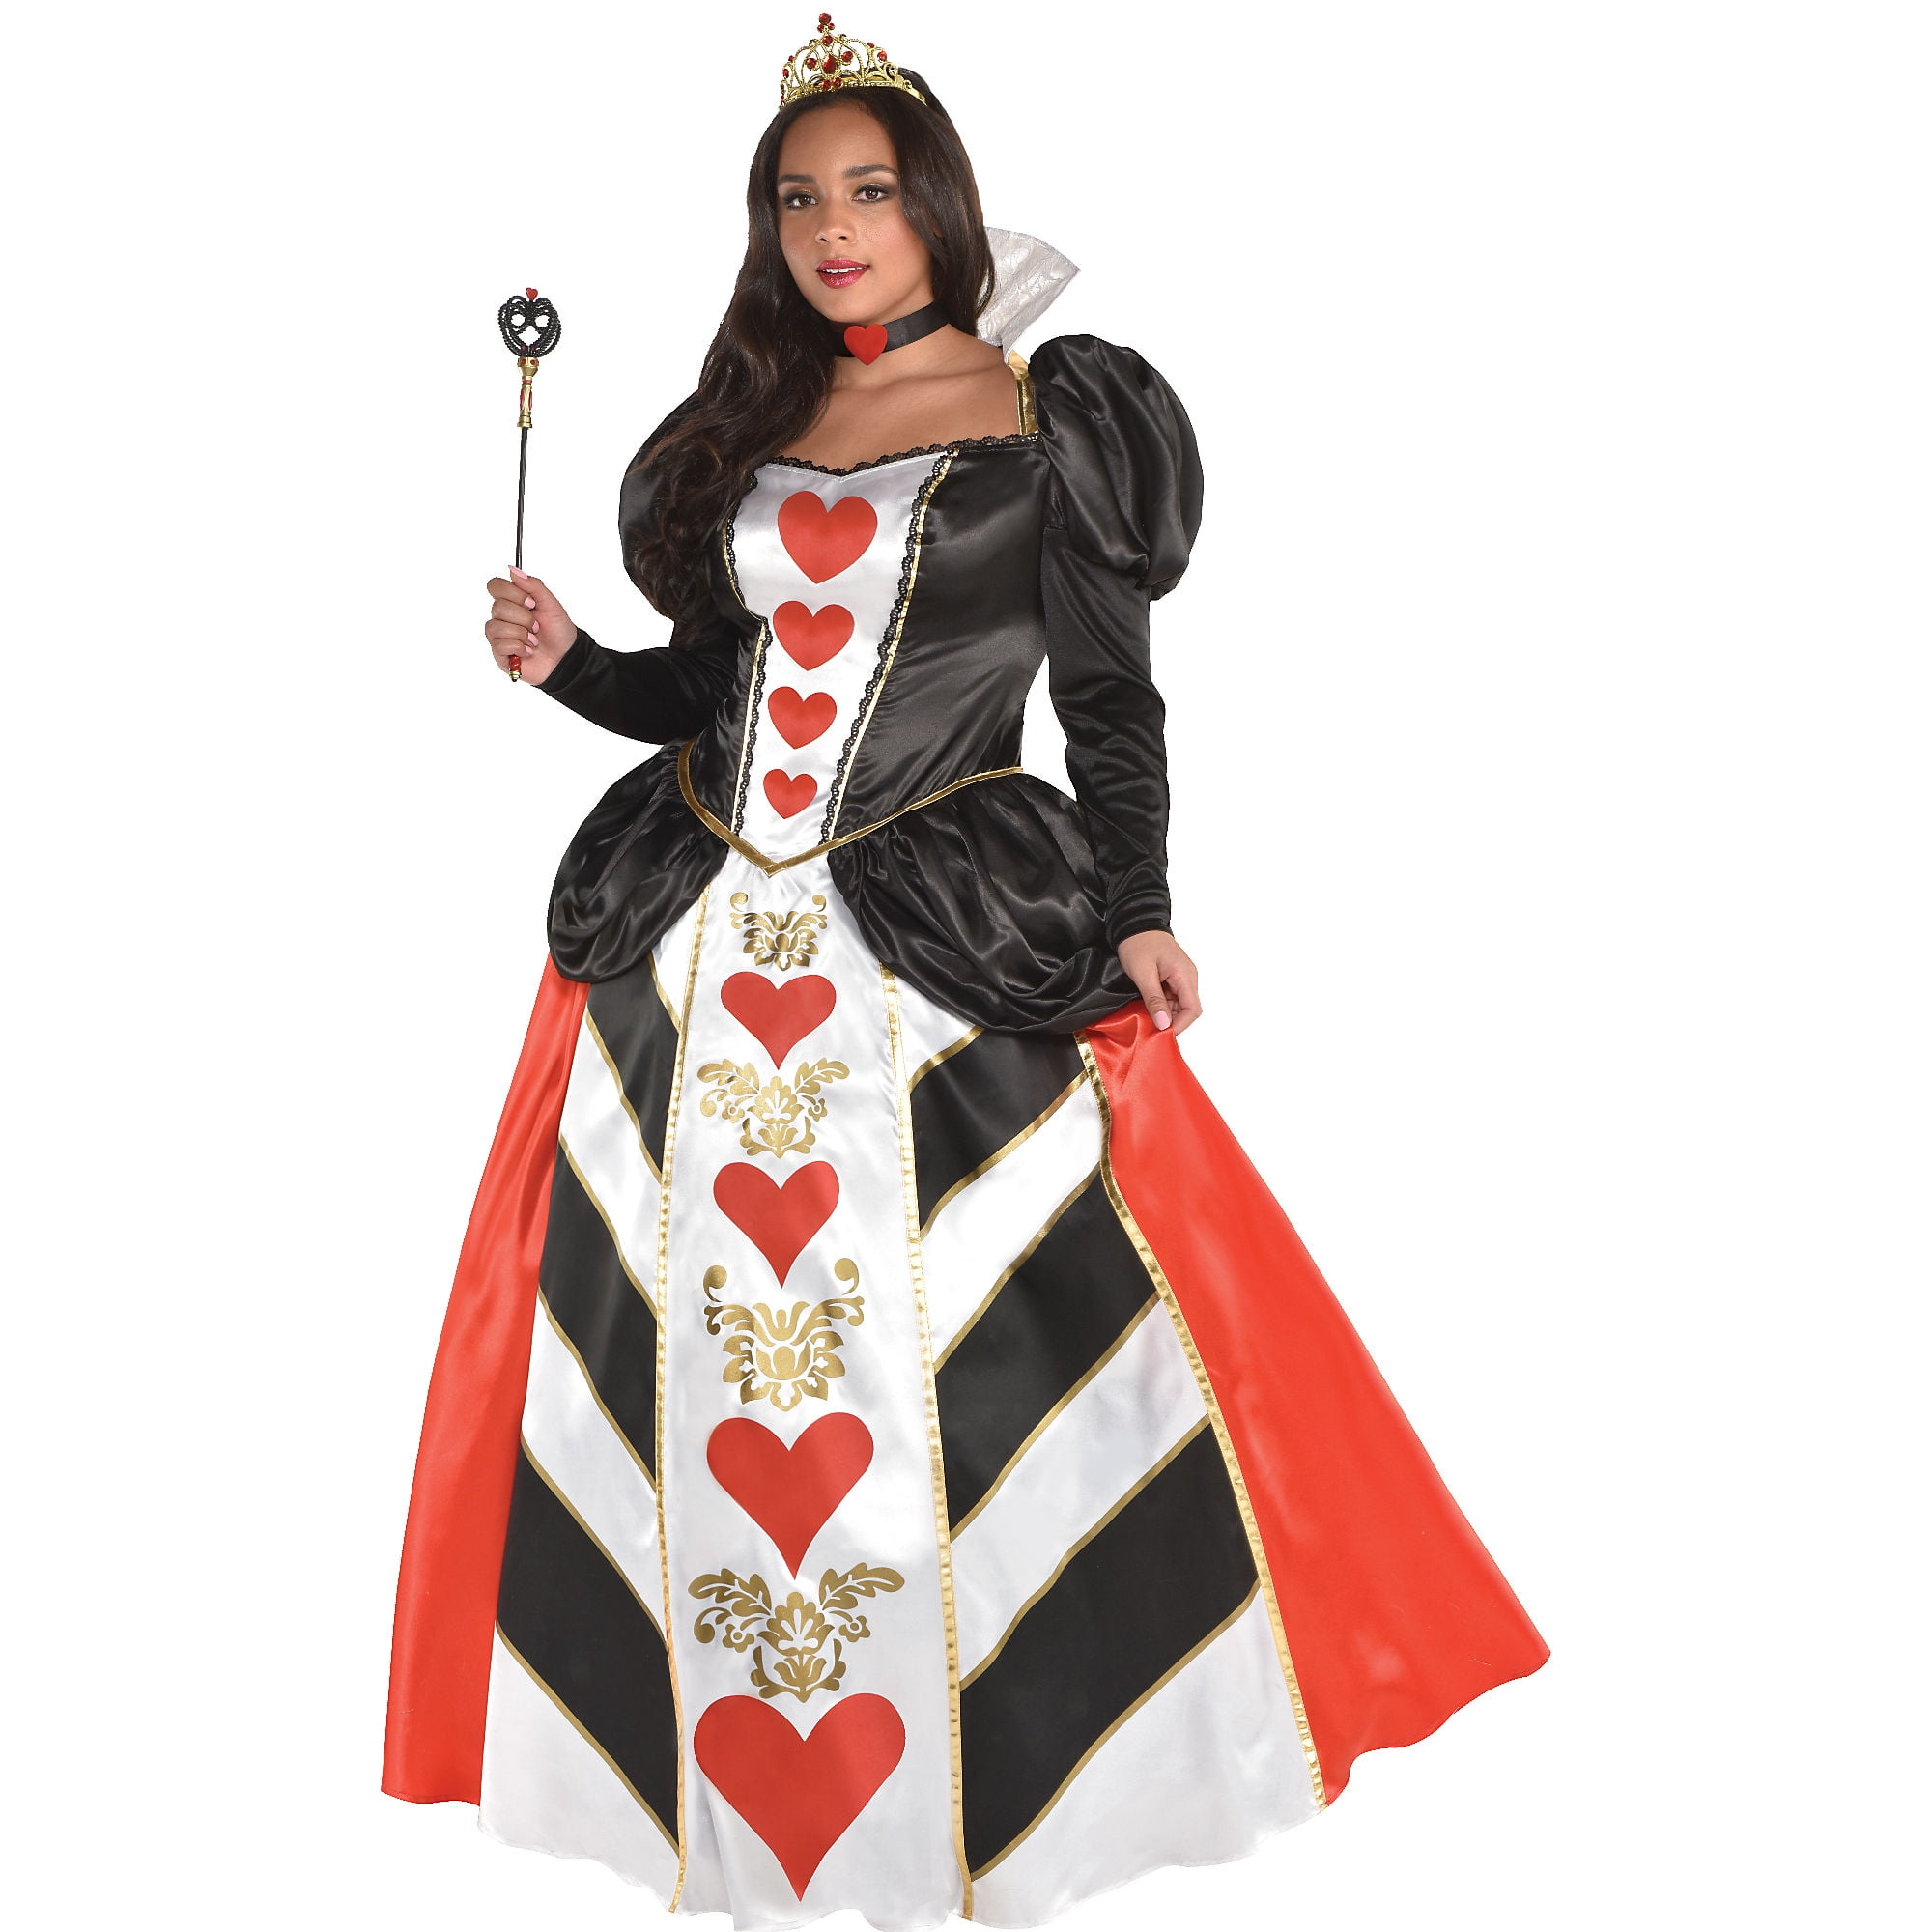 Regal Red Queen Plus Size Costume - Walmart.com